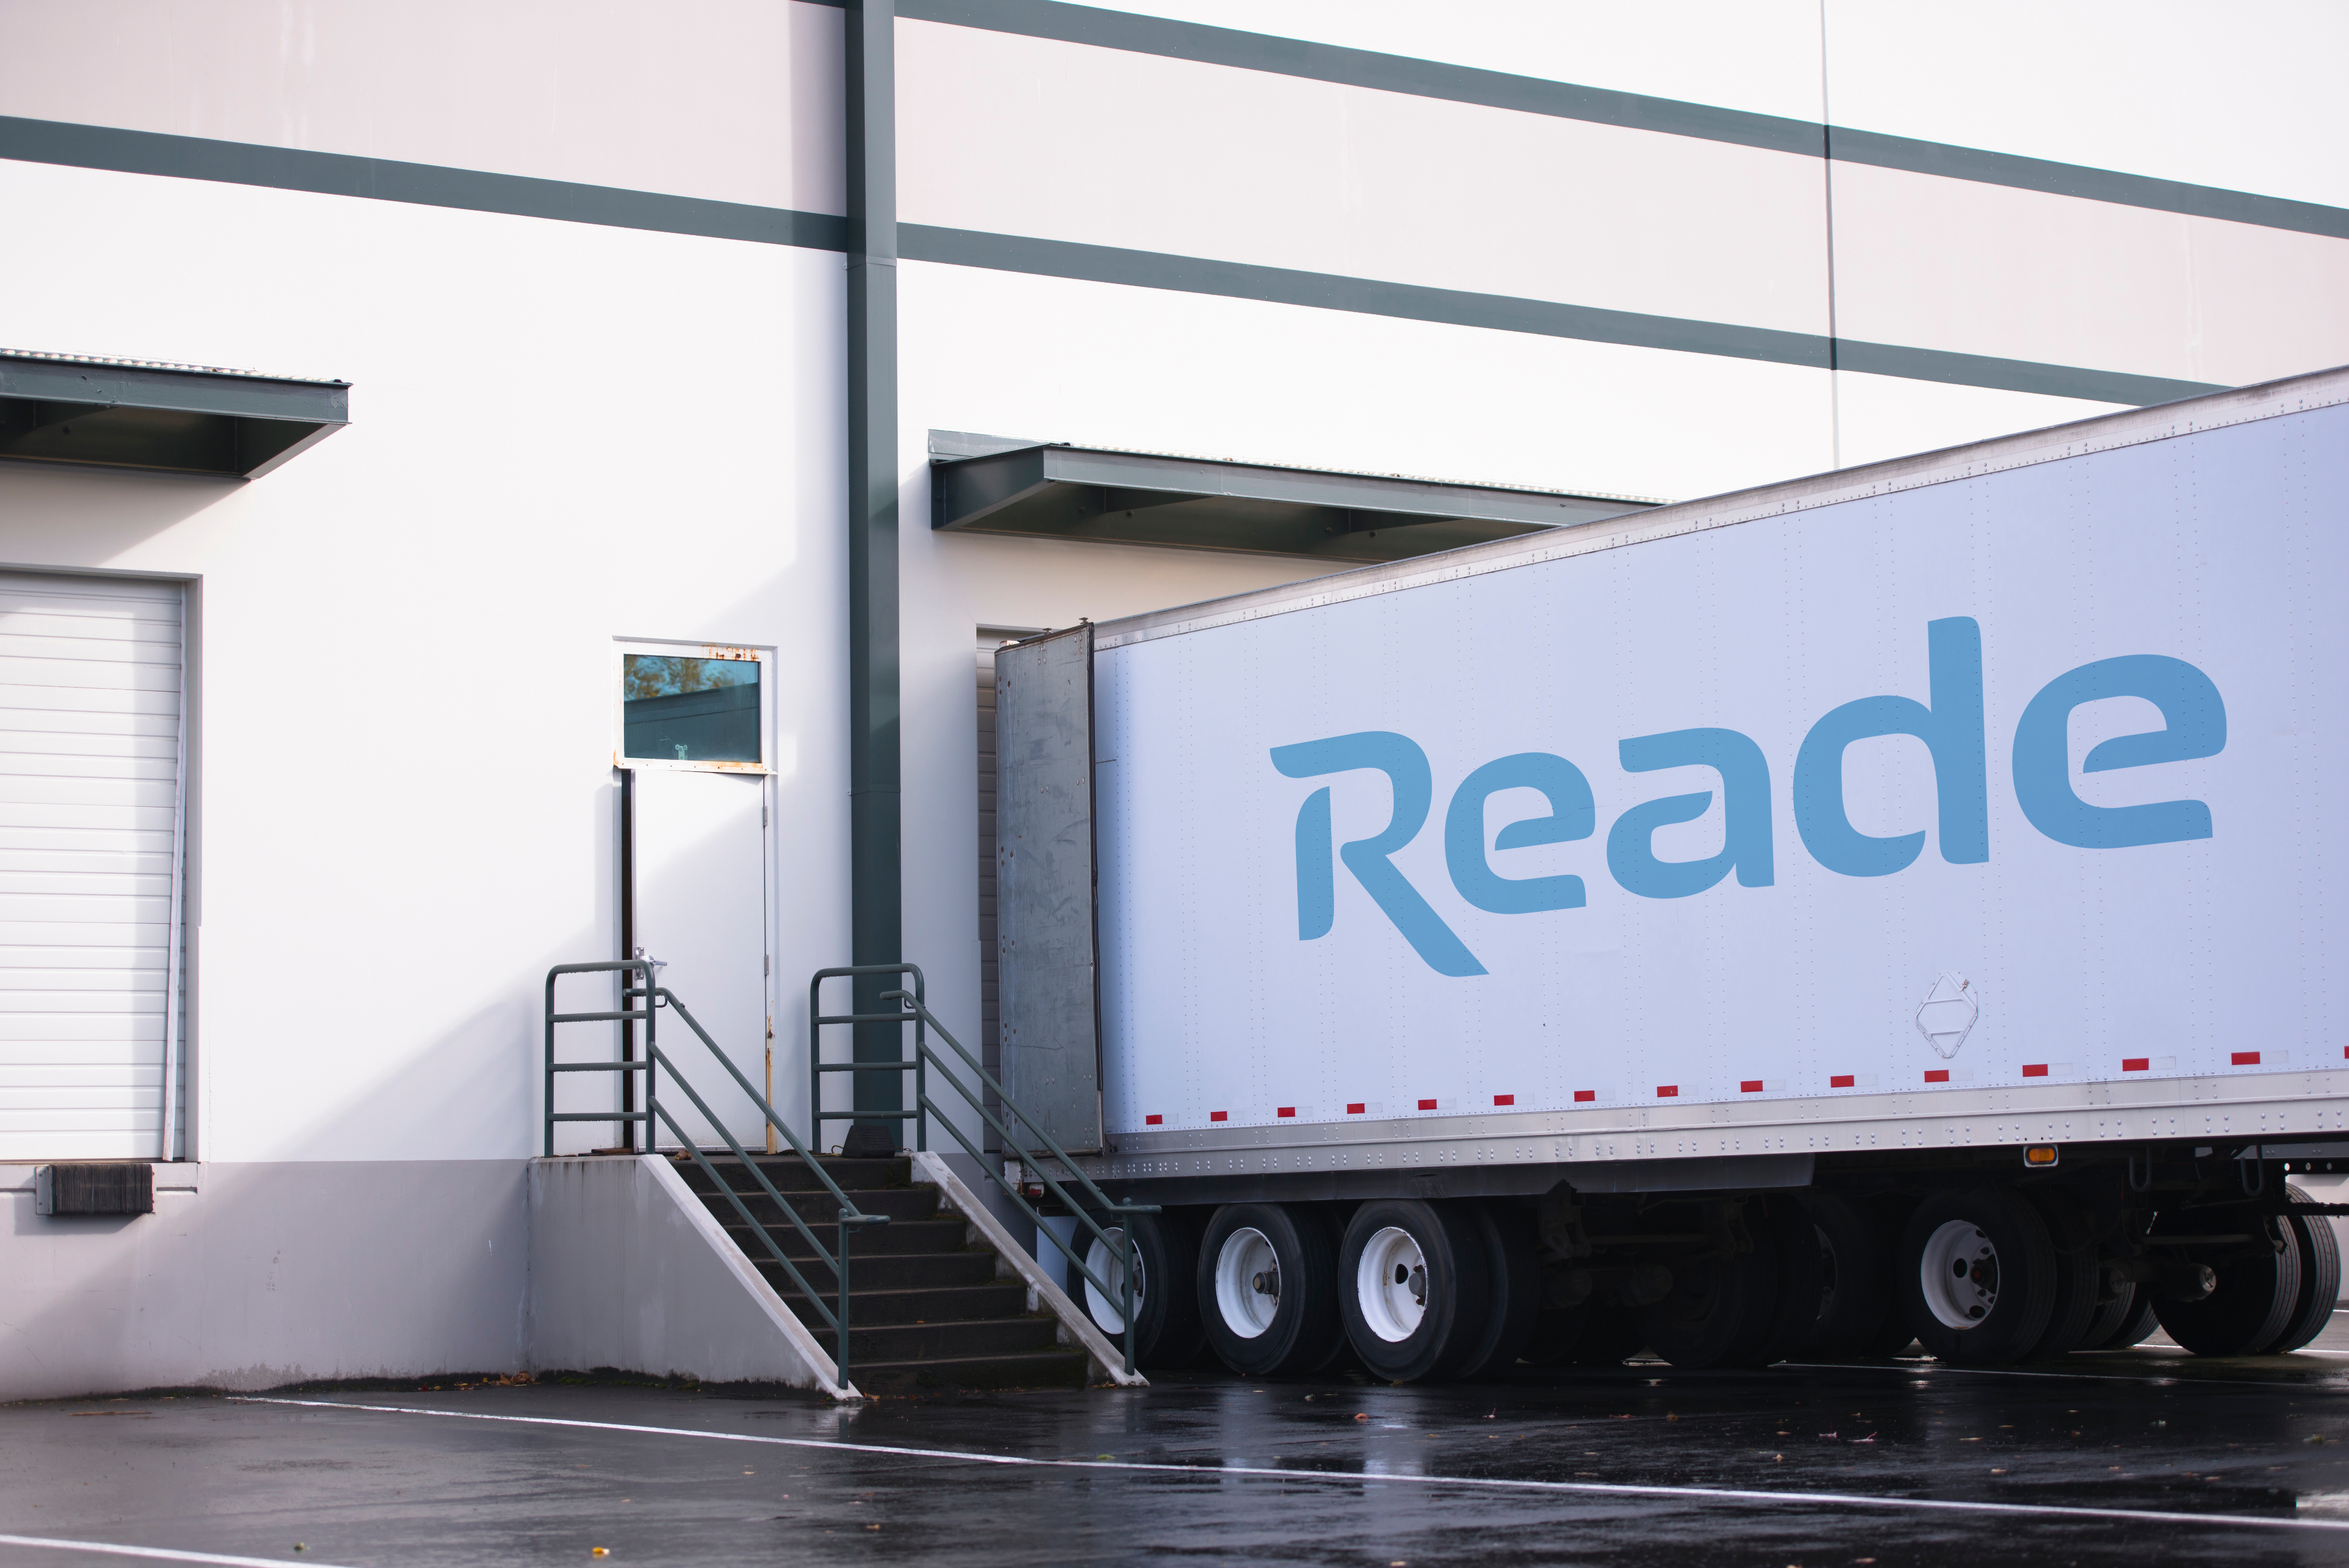 Reade branded semi truck